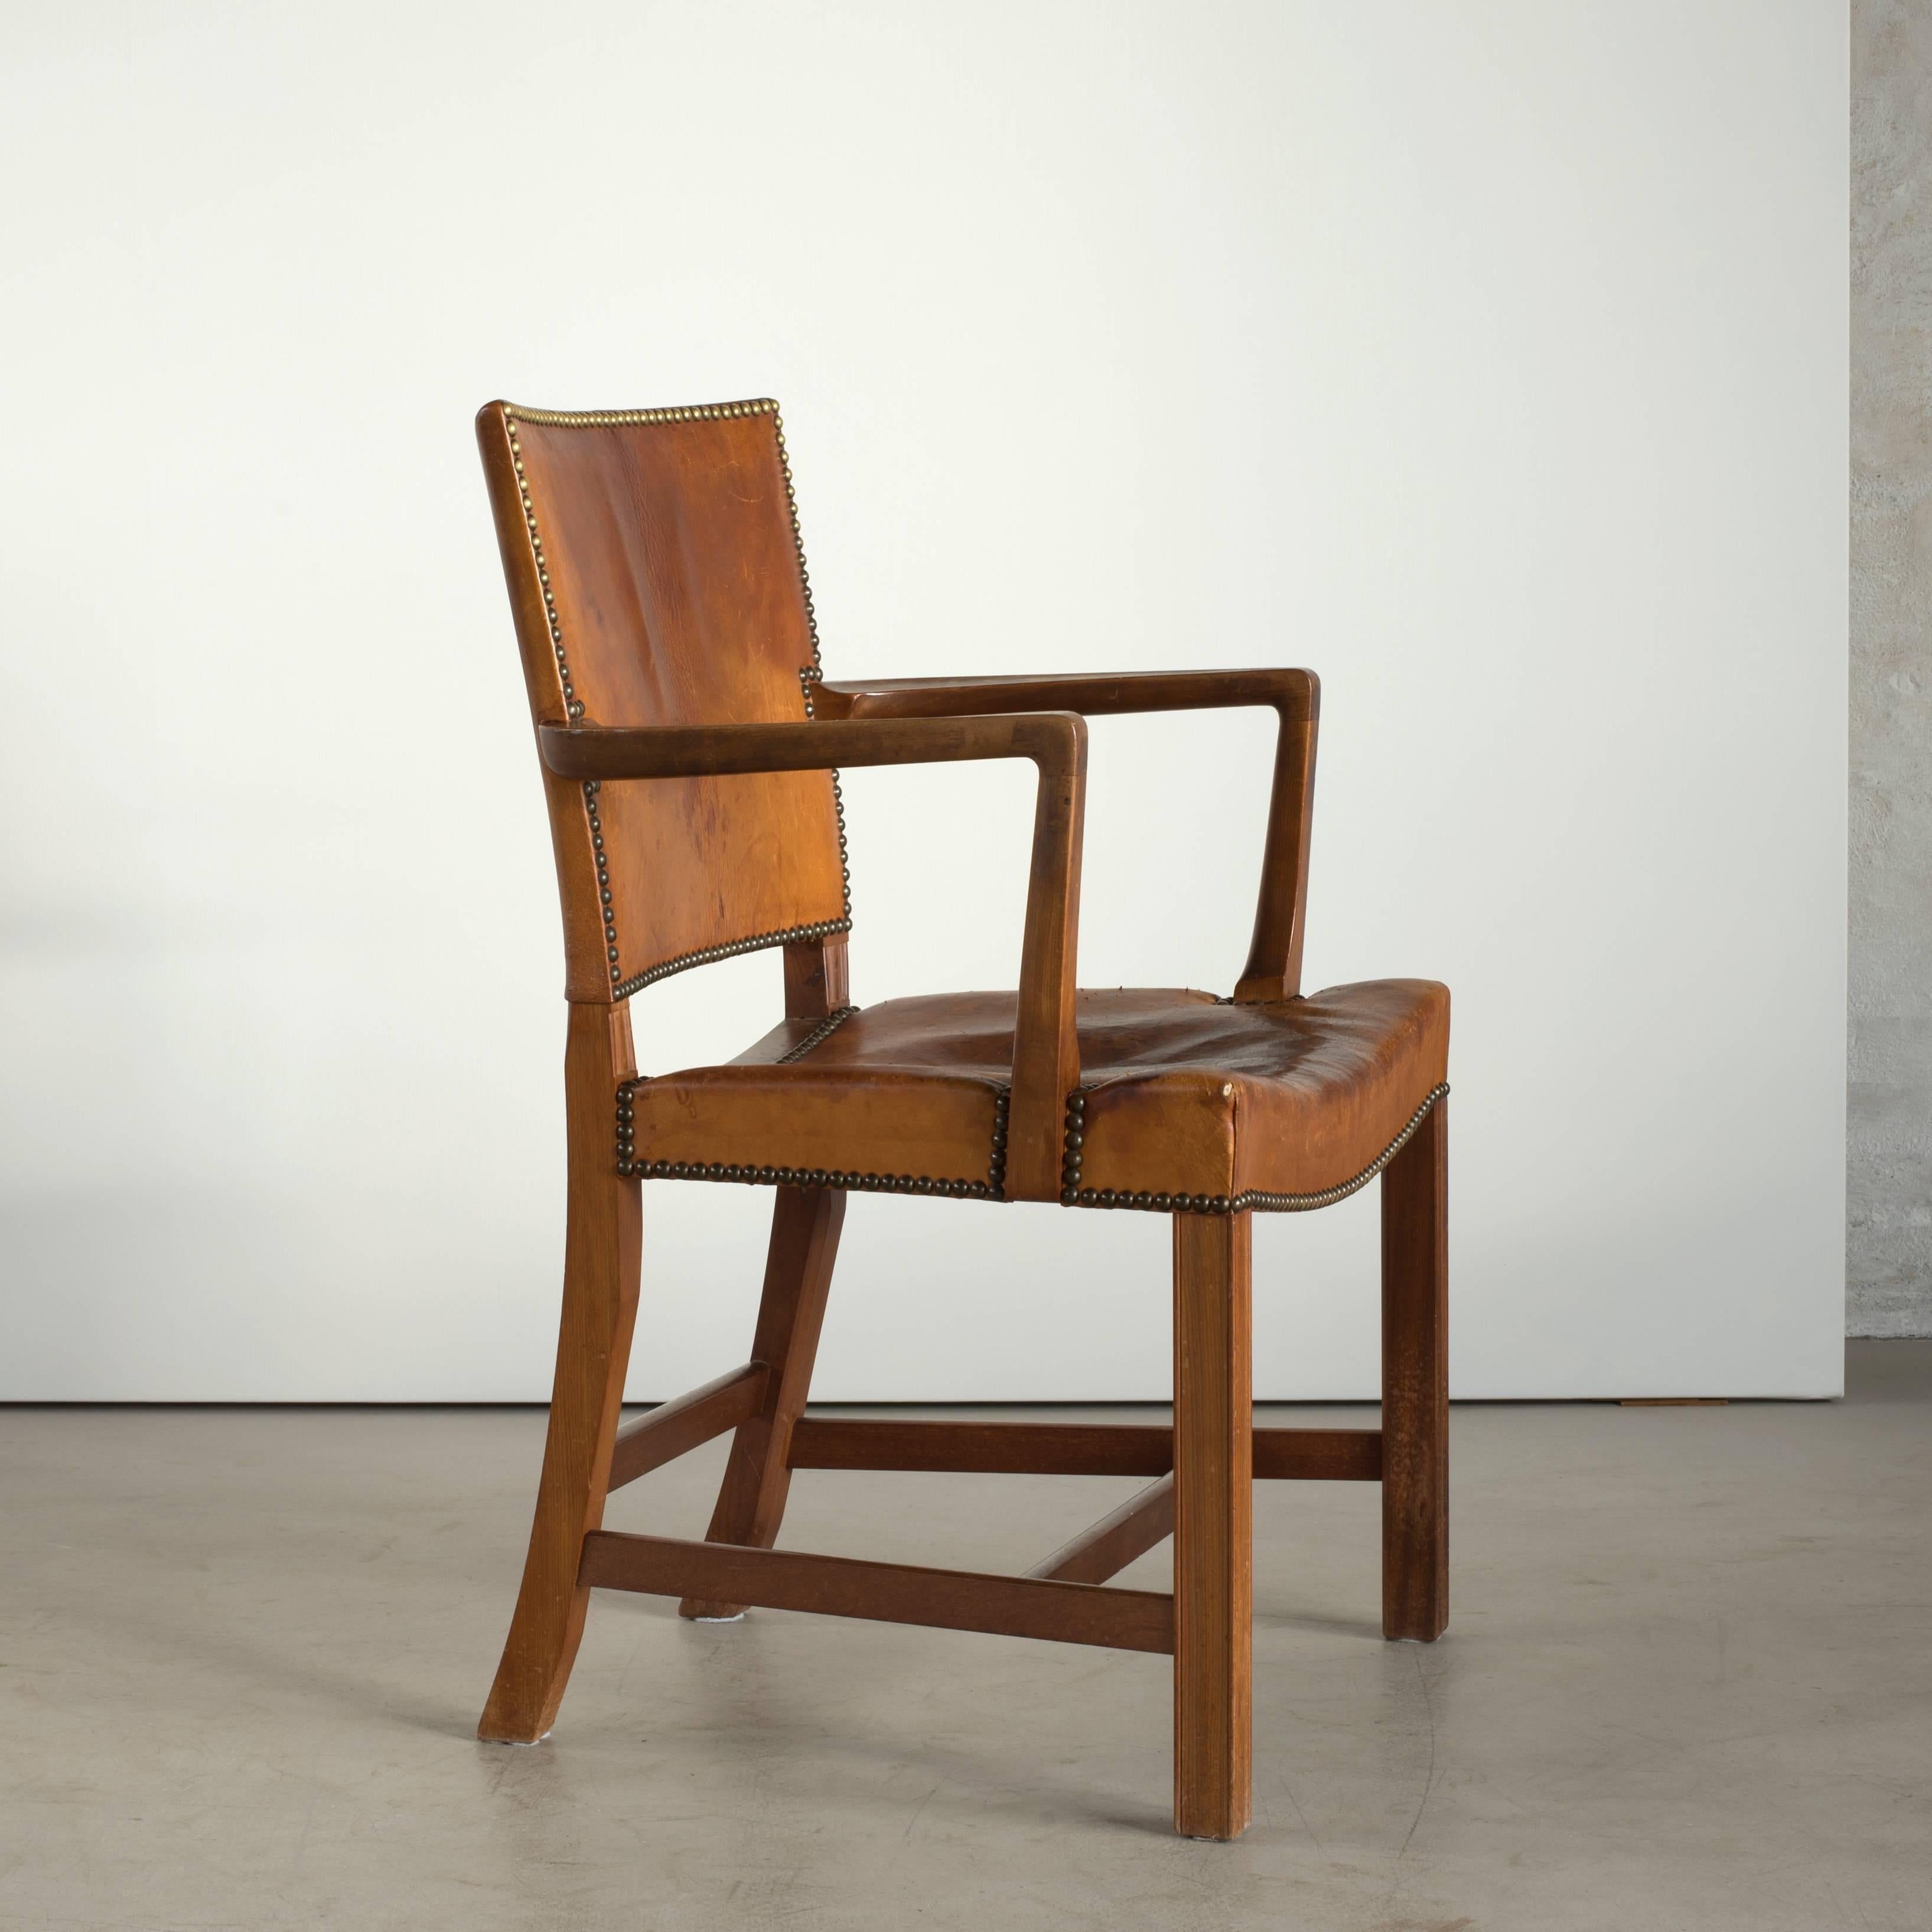 Kaare Klint armchair in Cuban mahogany, Niger leather and brass. Executed by Rud. Rasmussen, 1930s.

Reverse with paper label ‘RUD. RASMUSSEN/SNEDKERIER/45 NØRREBROGADE/KØBENHAVN.